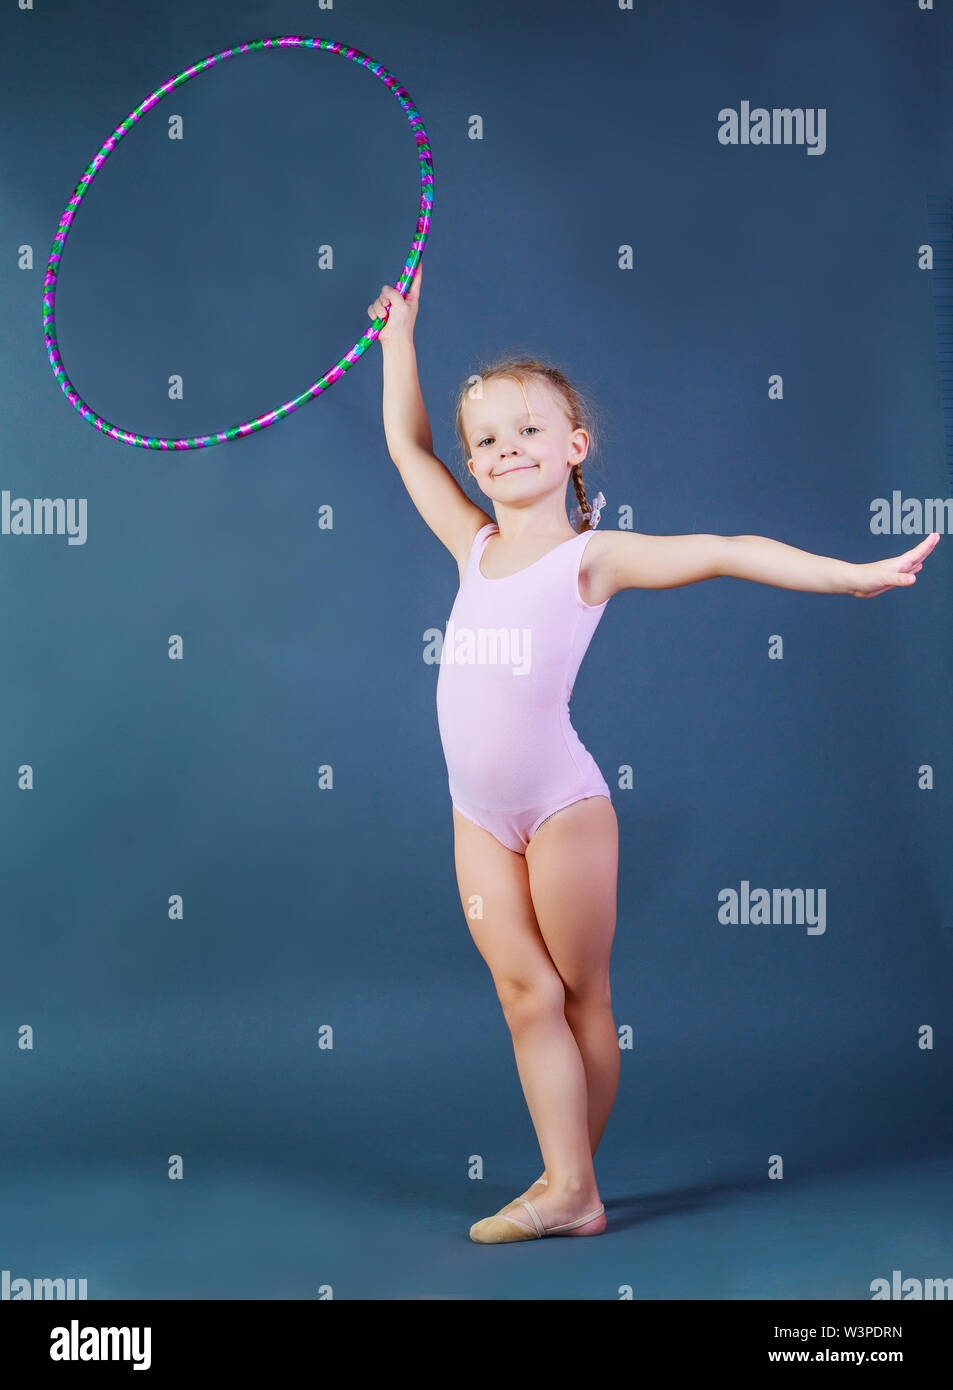 niña haciendo gimnasia con aro aislado sobre fondo blanco Fotografía de  stock - Alamy